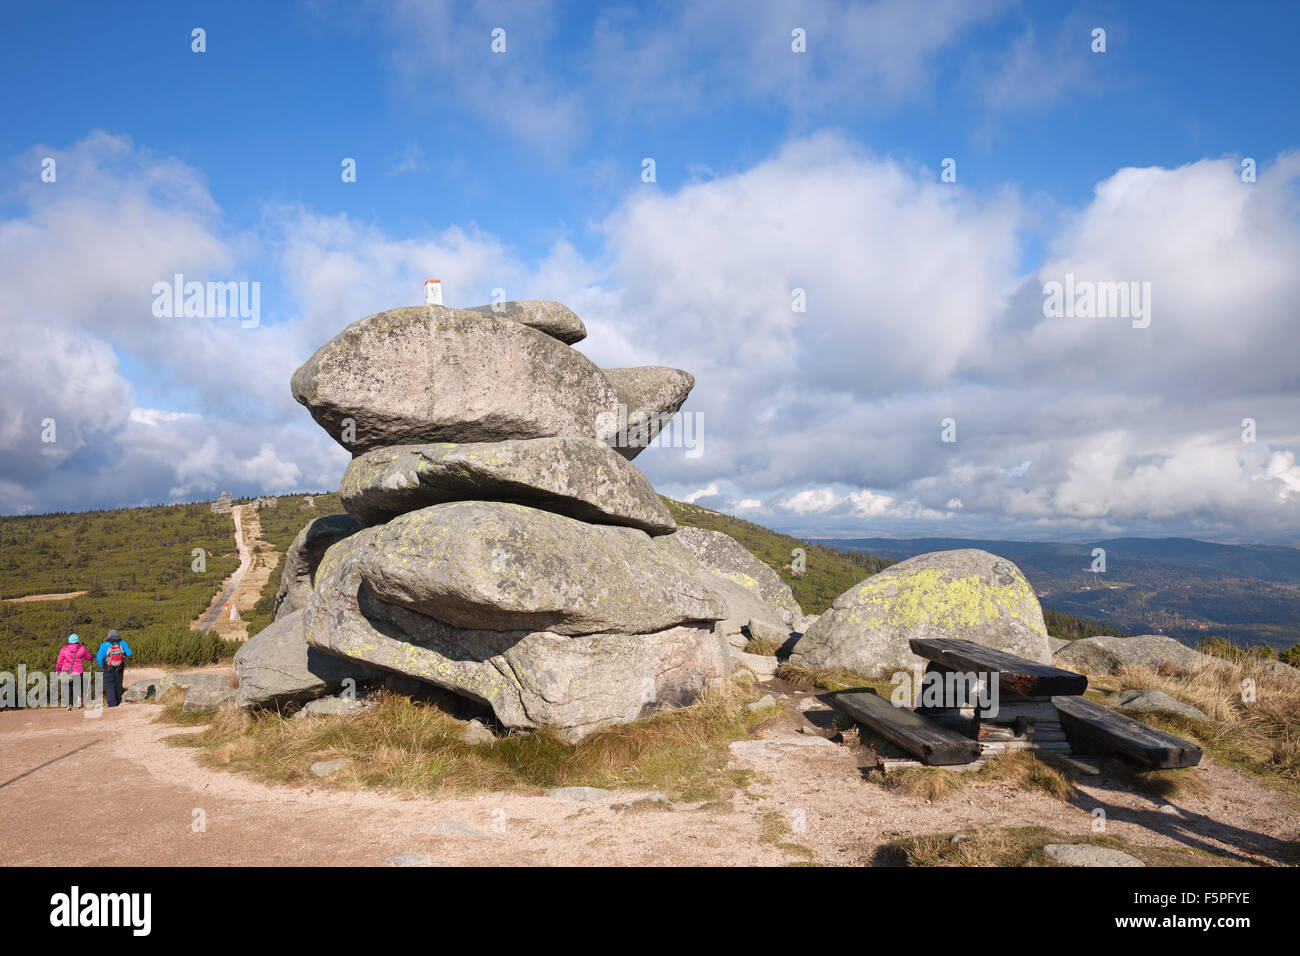 Tvaroznik granite rock formation in Krkonosze - Karkonosze mountains on Czech and Poland border. Stock Photo